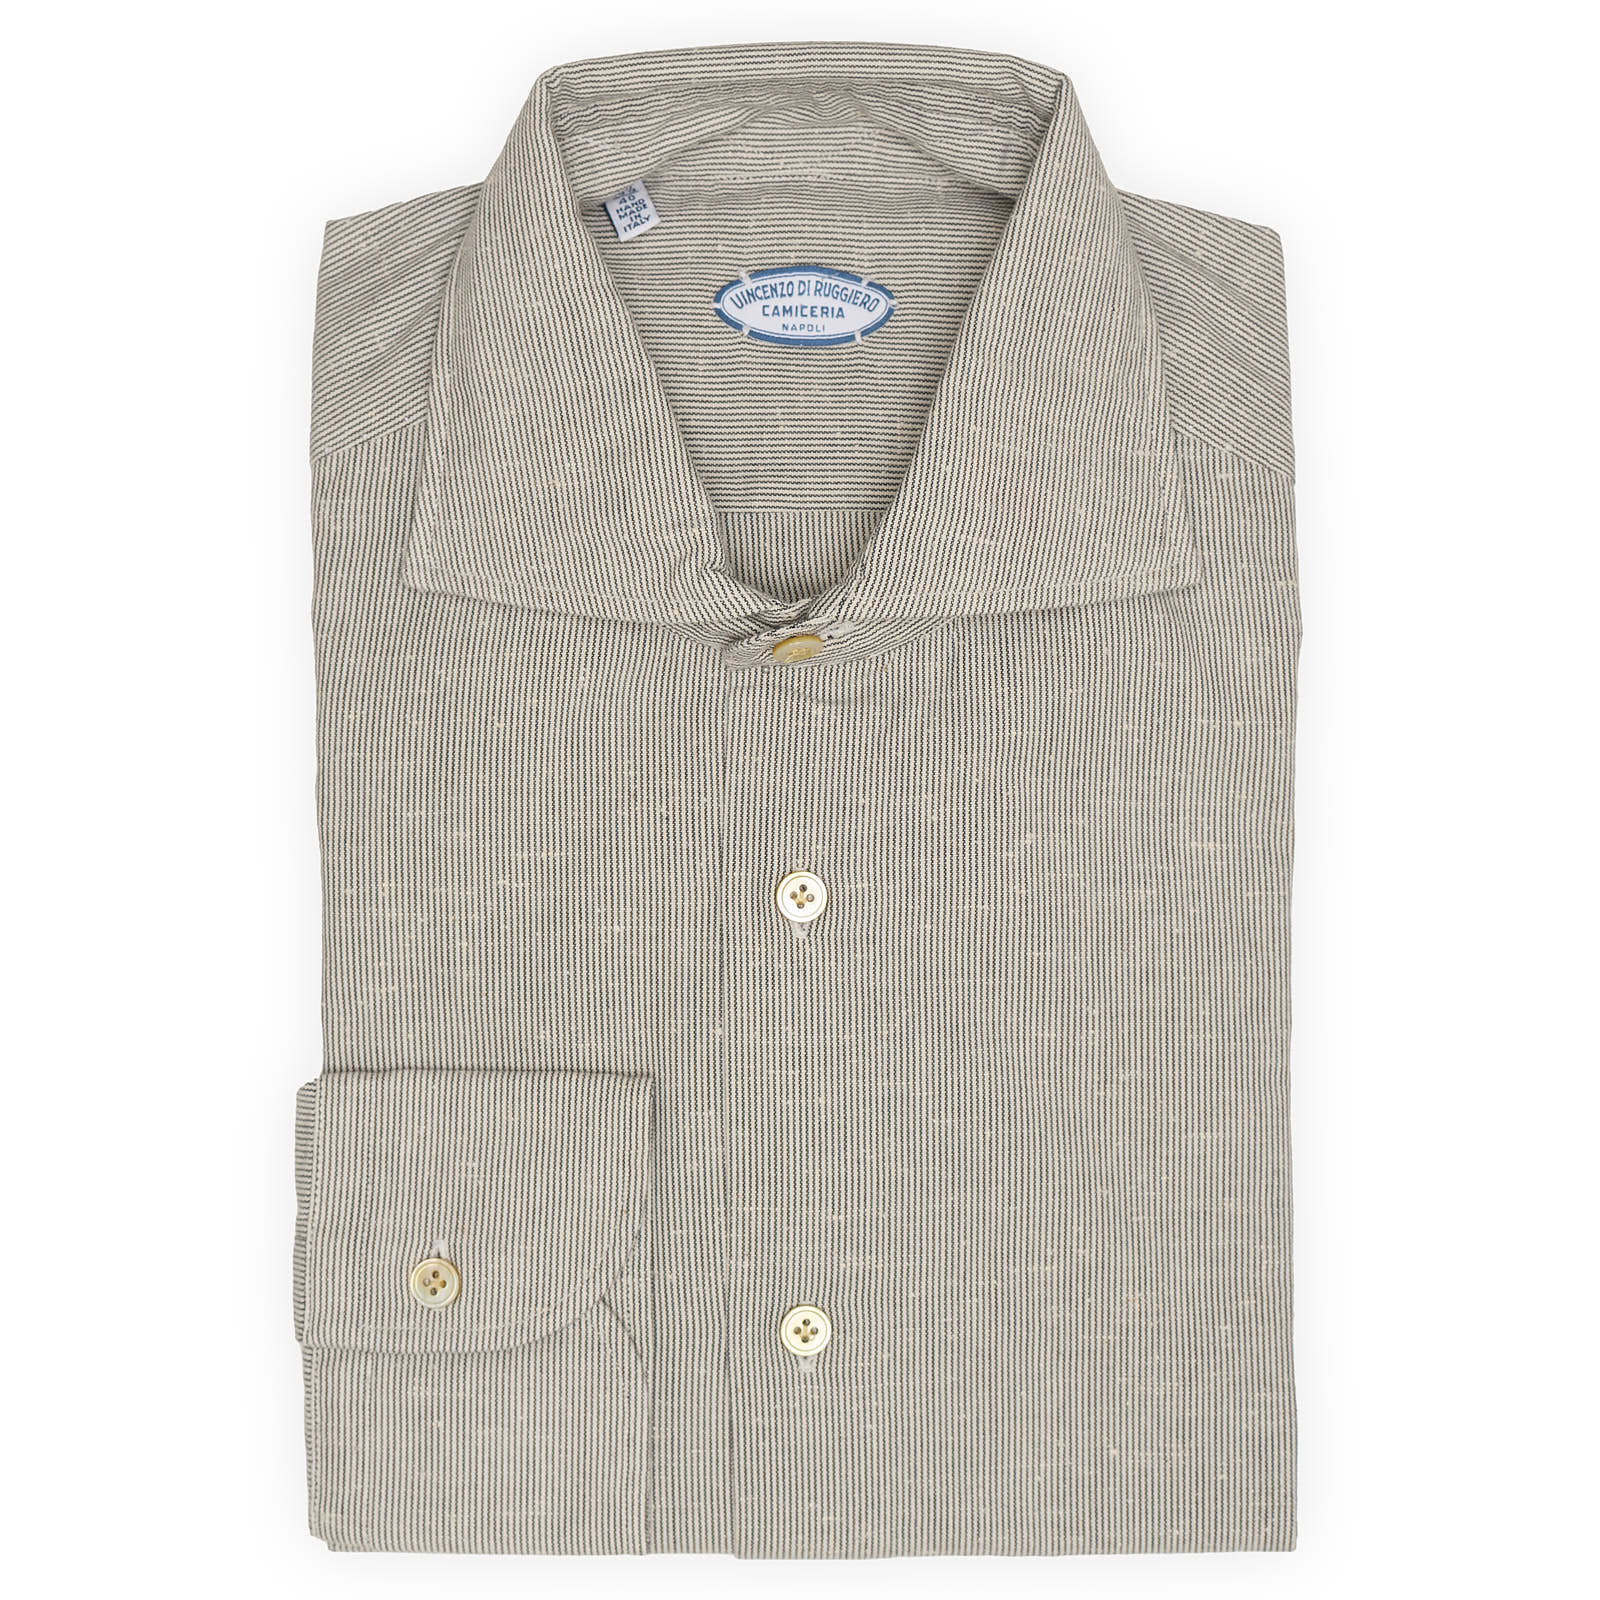 VINCENZO DI RUGGIERO Gray Striped Cotton Shirt EU 40 NEW US 15.75